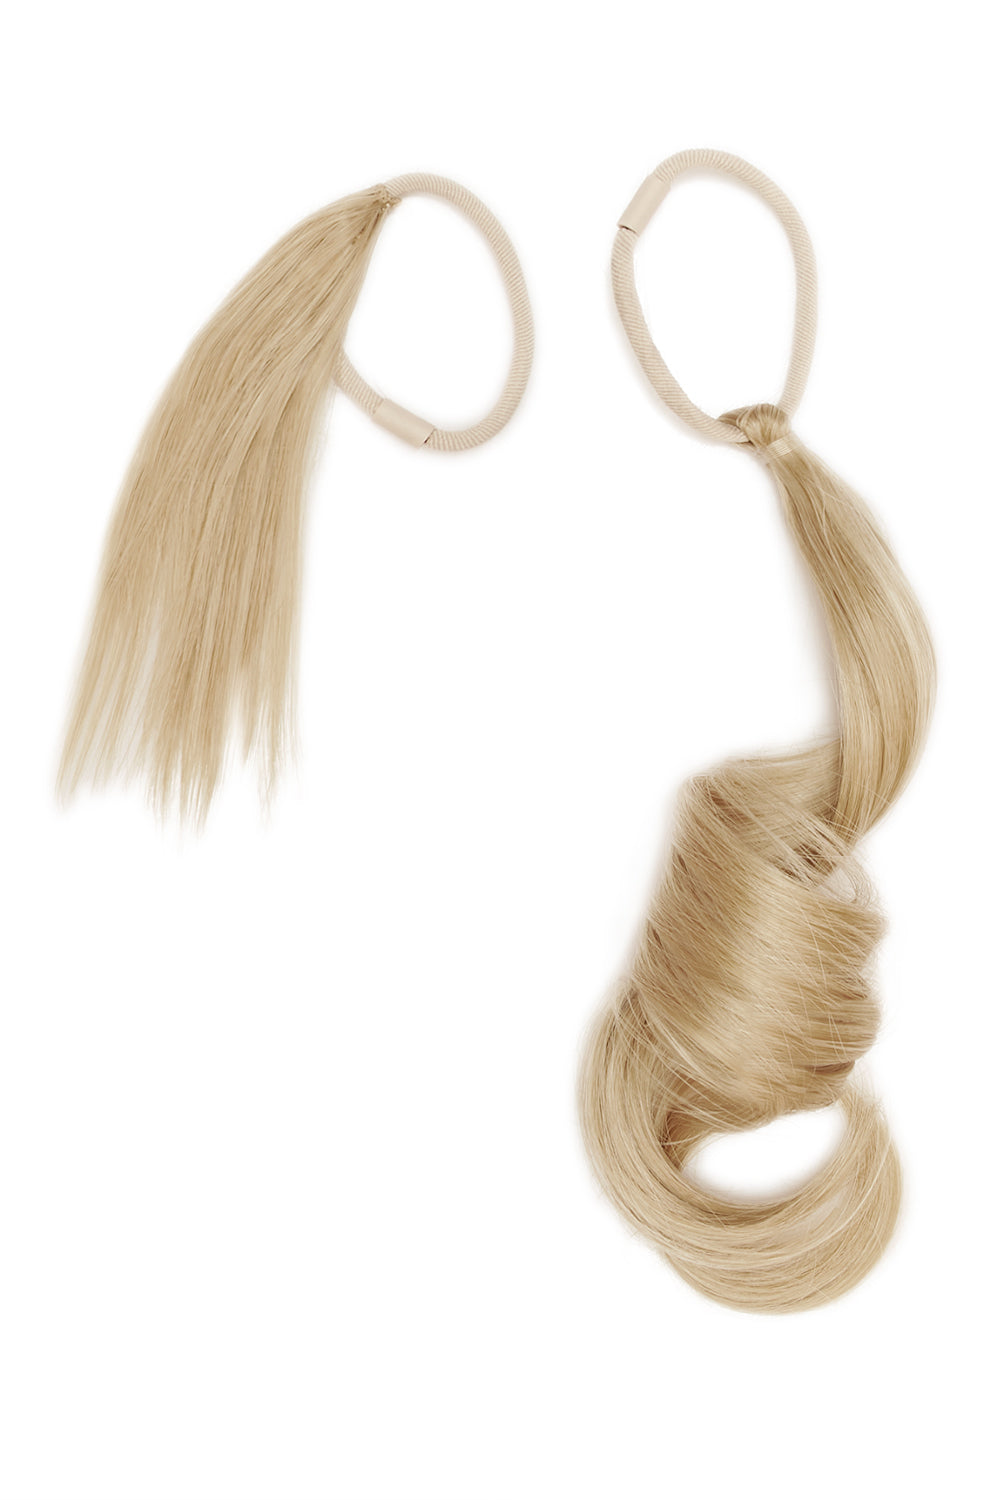 Feathered Bun Booster - California Blonde Festival Hair Inspiration